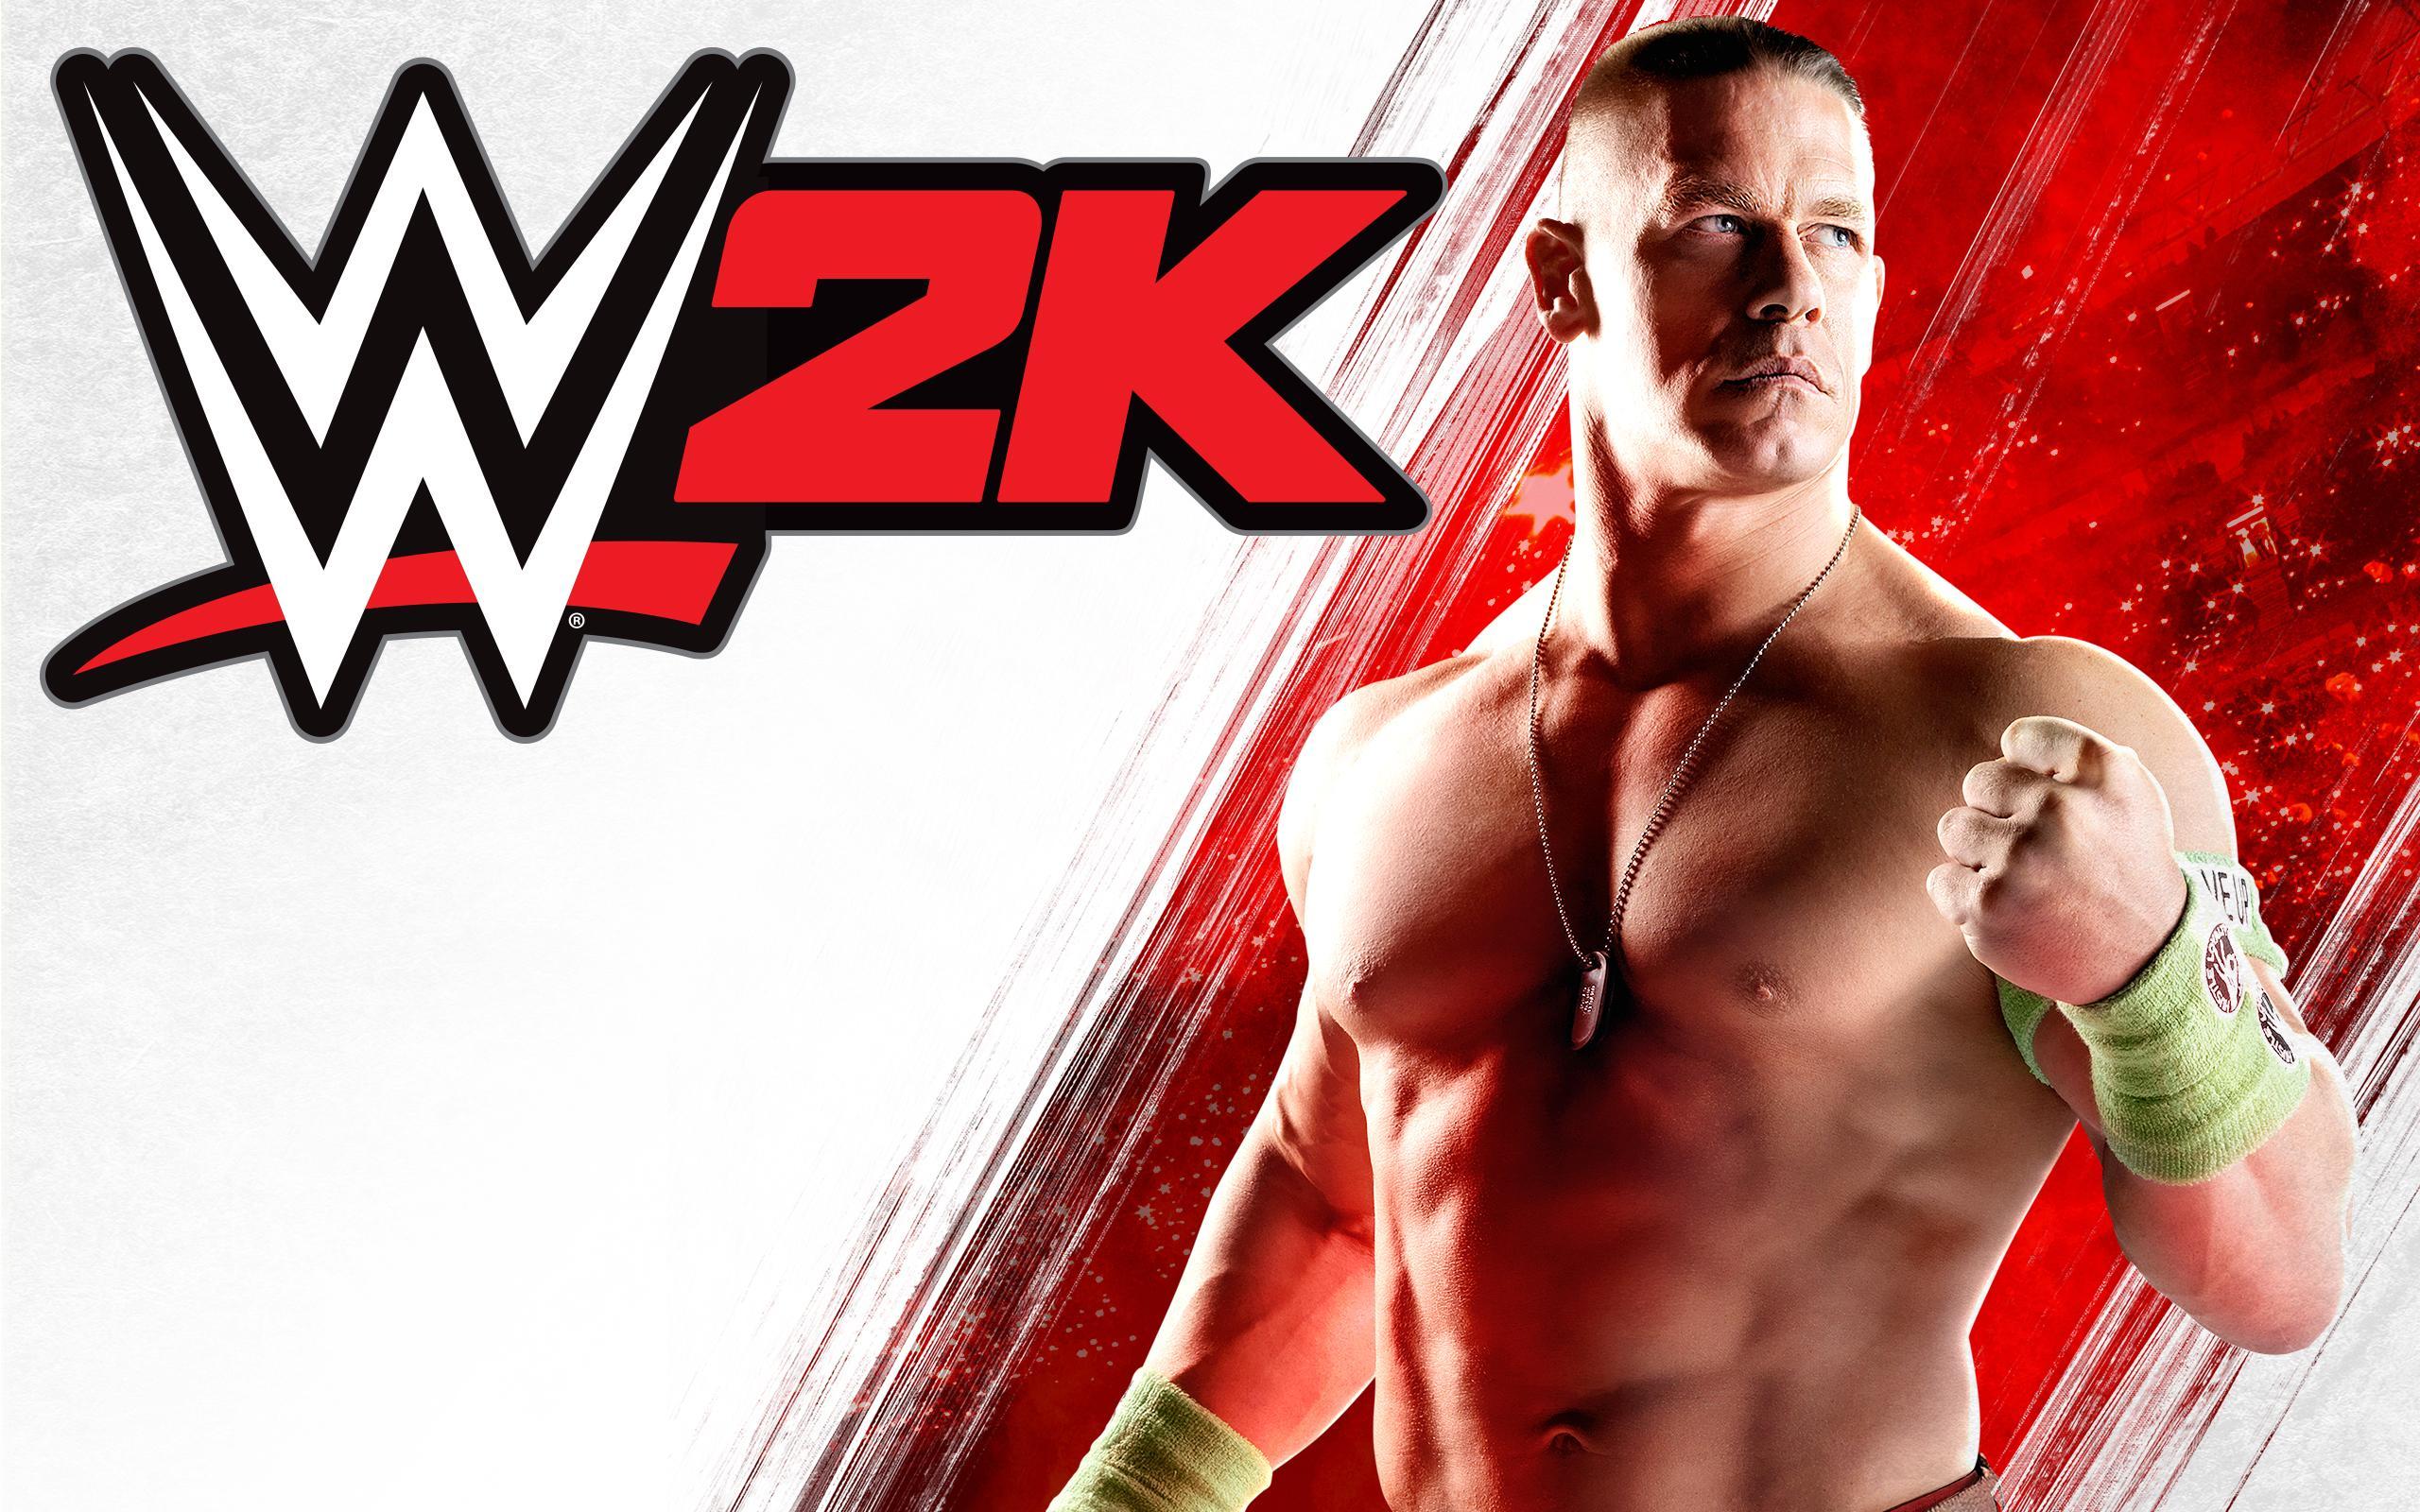 WWE 2K16 HD wallpaper free download